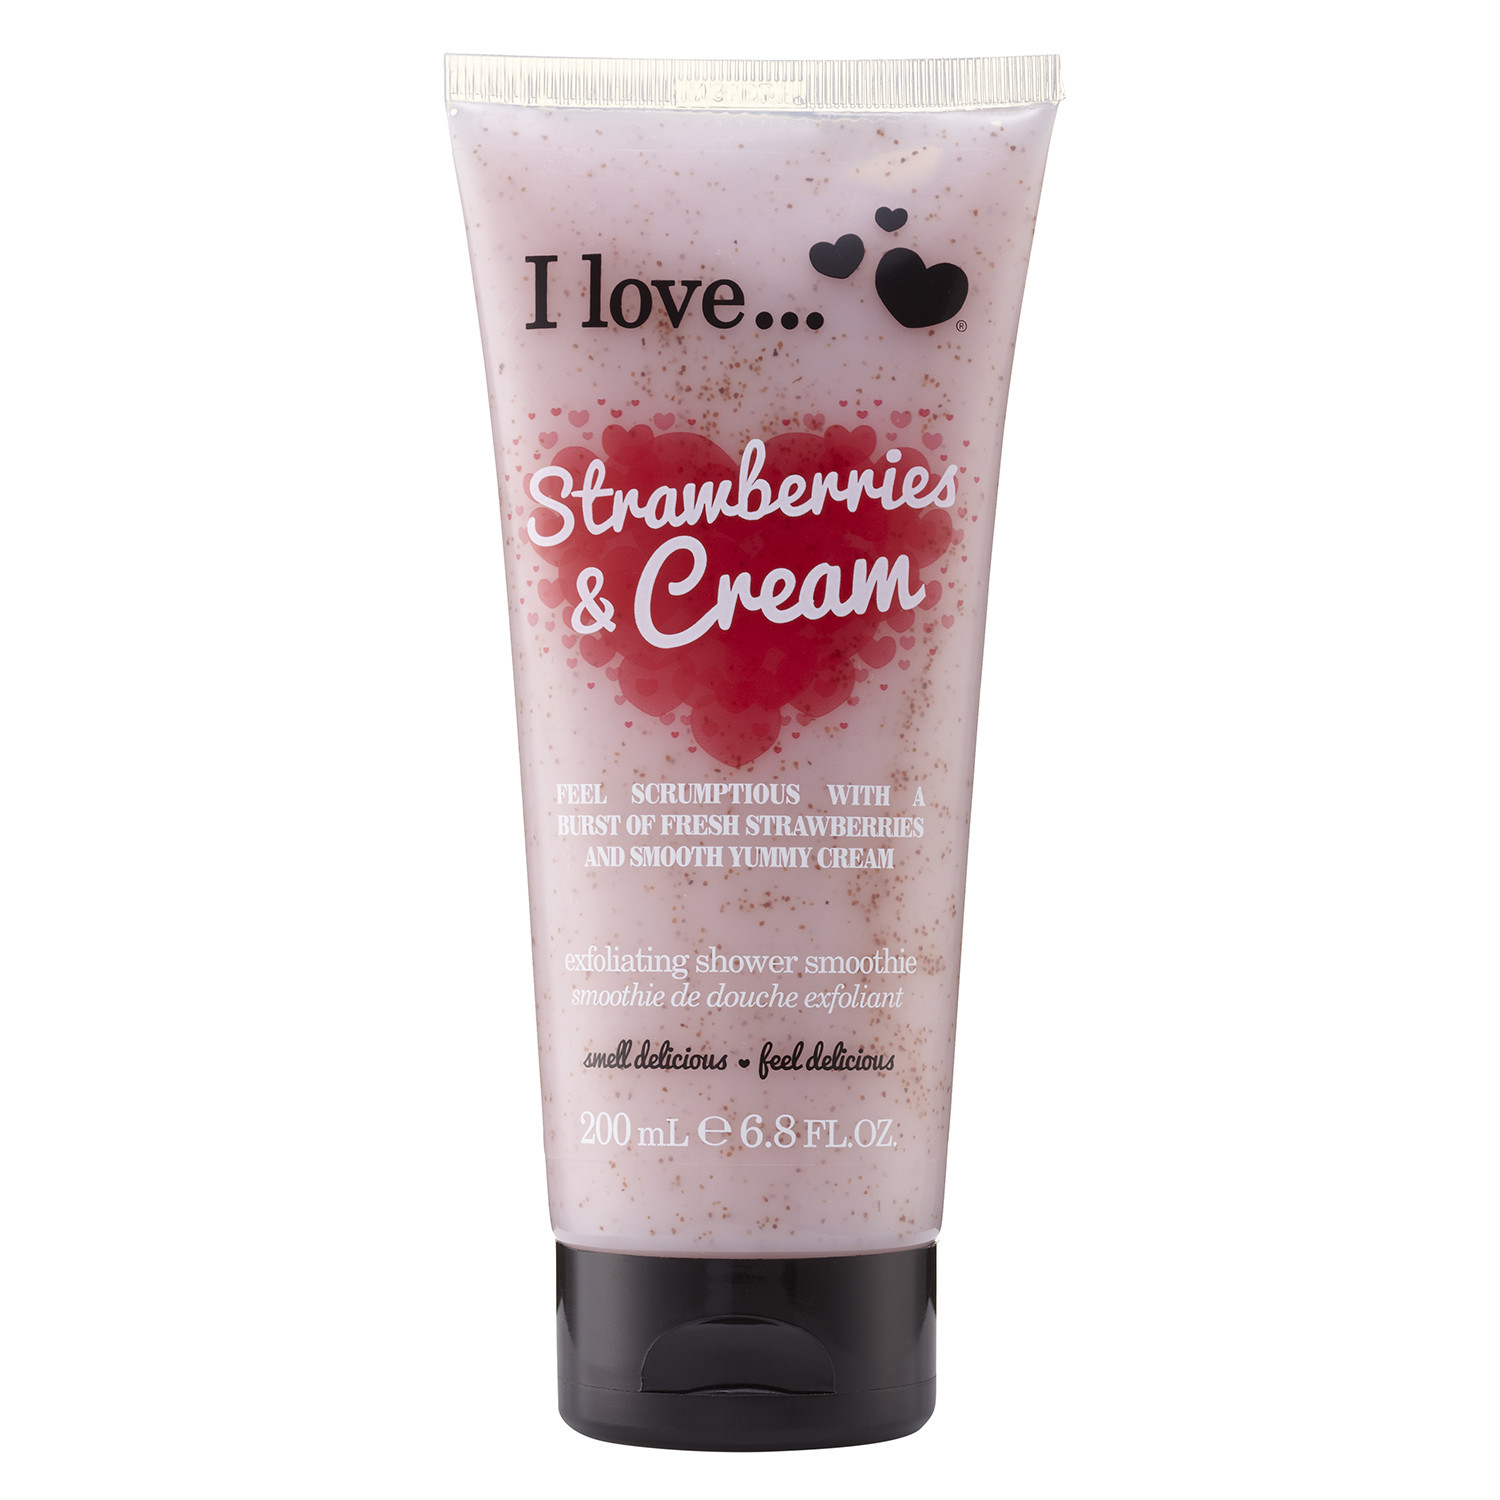 I Love Exfoliating Shower Smoothie 200ml - Strawberries and Cream Image